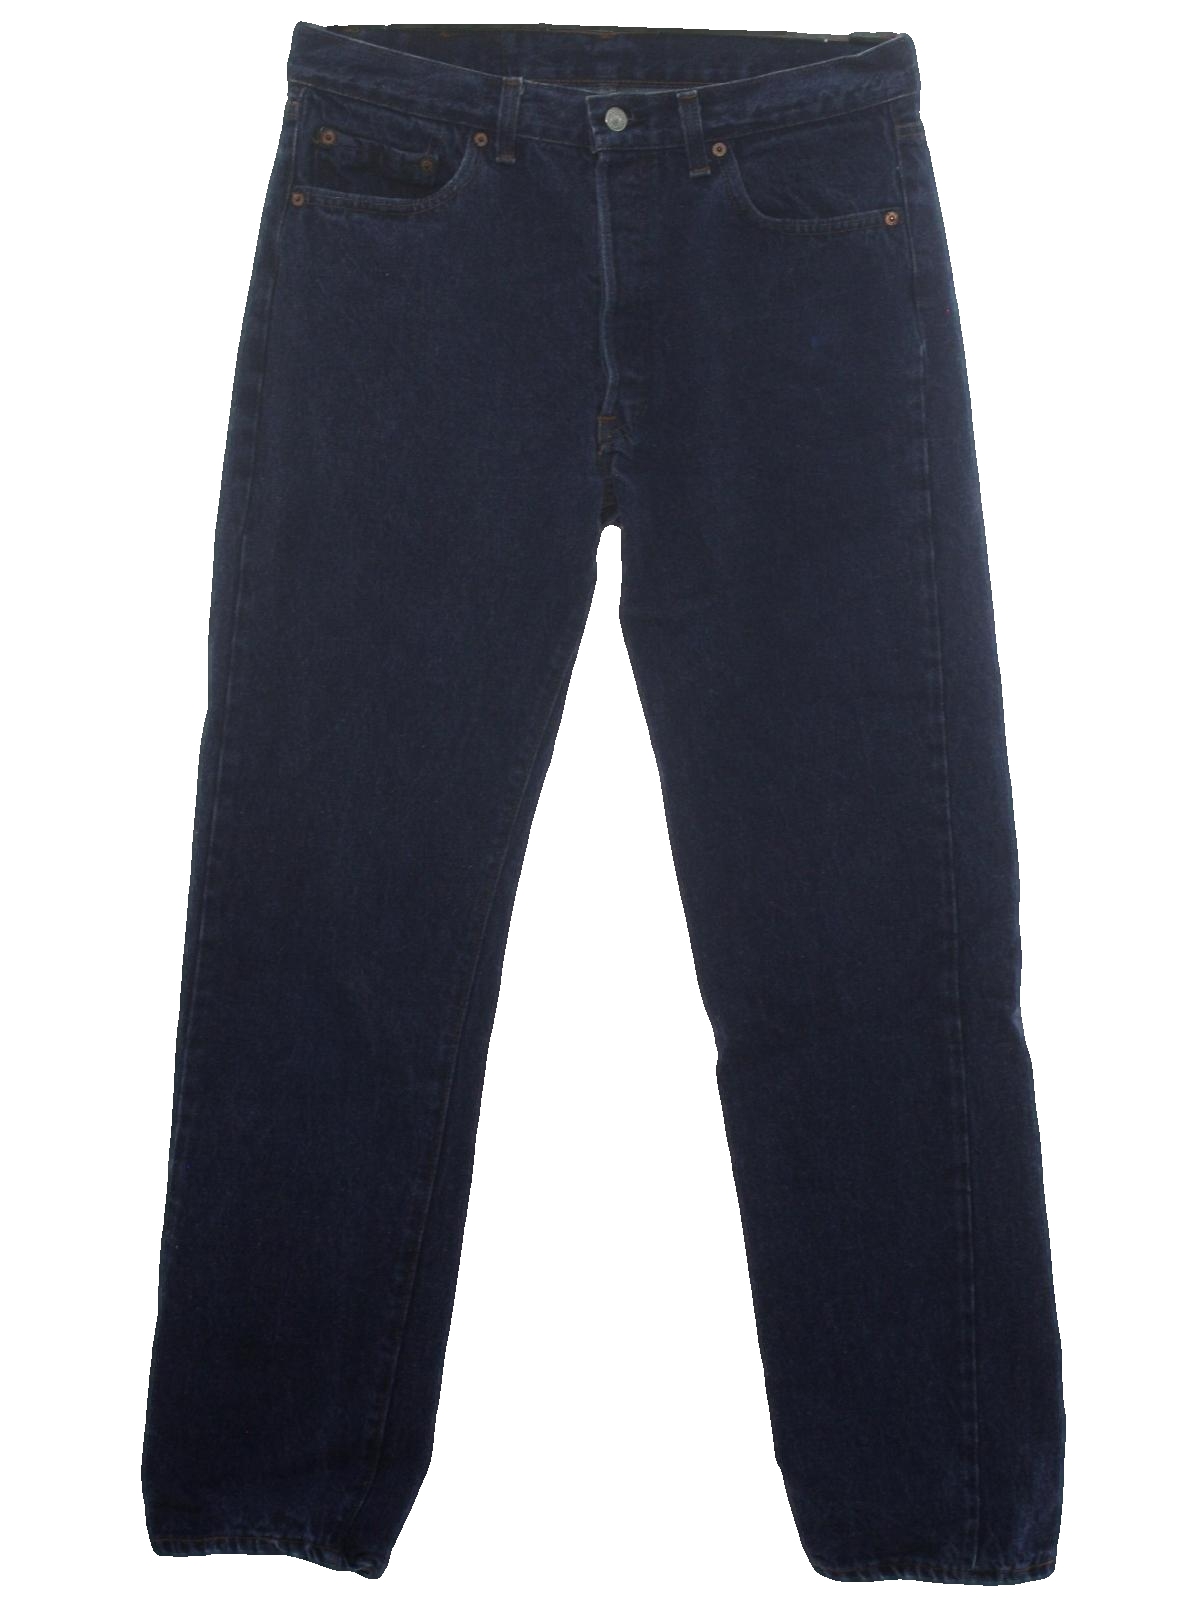 Actualizar 46+ imagen boscov's levis jeans - Thptnganamst.edu.vn